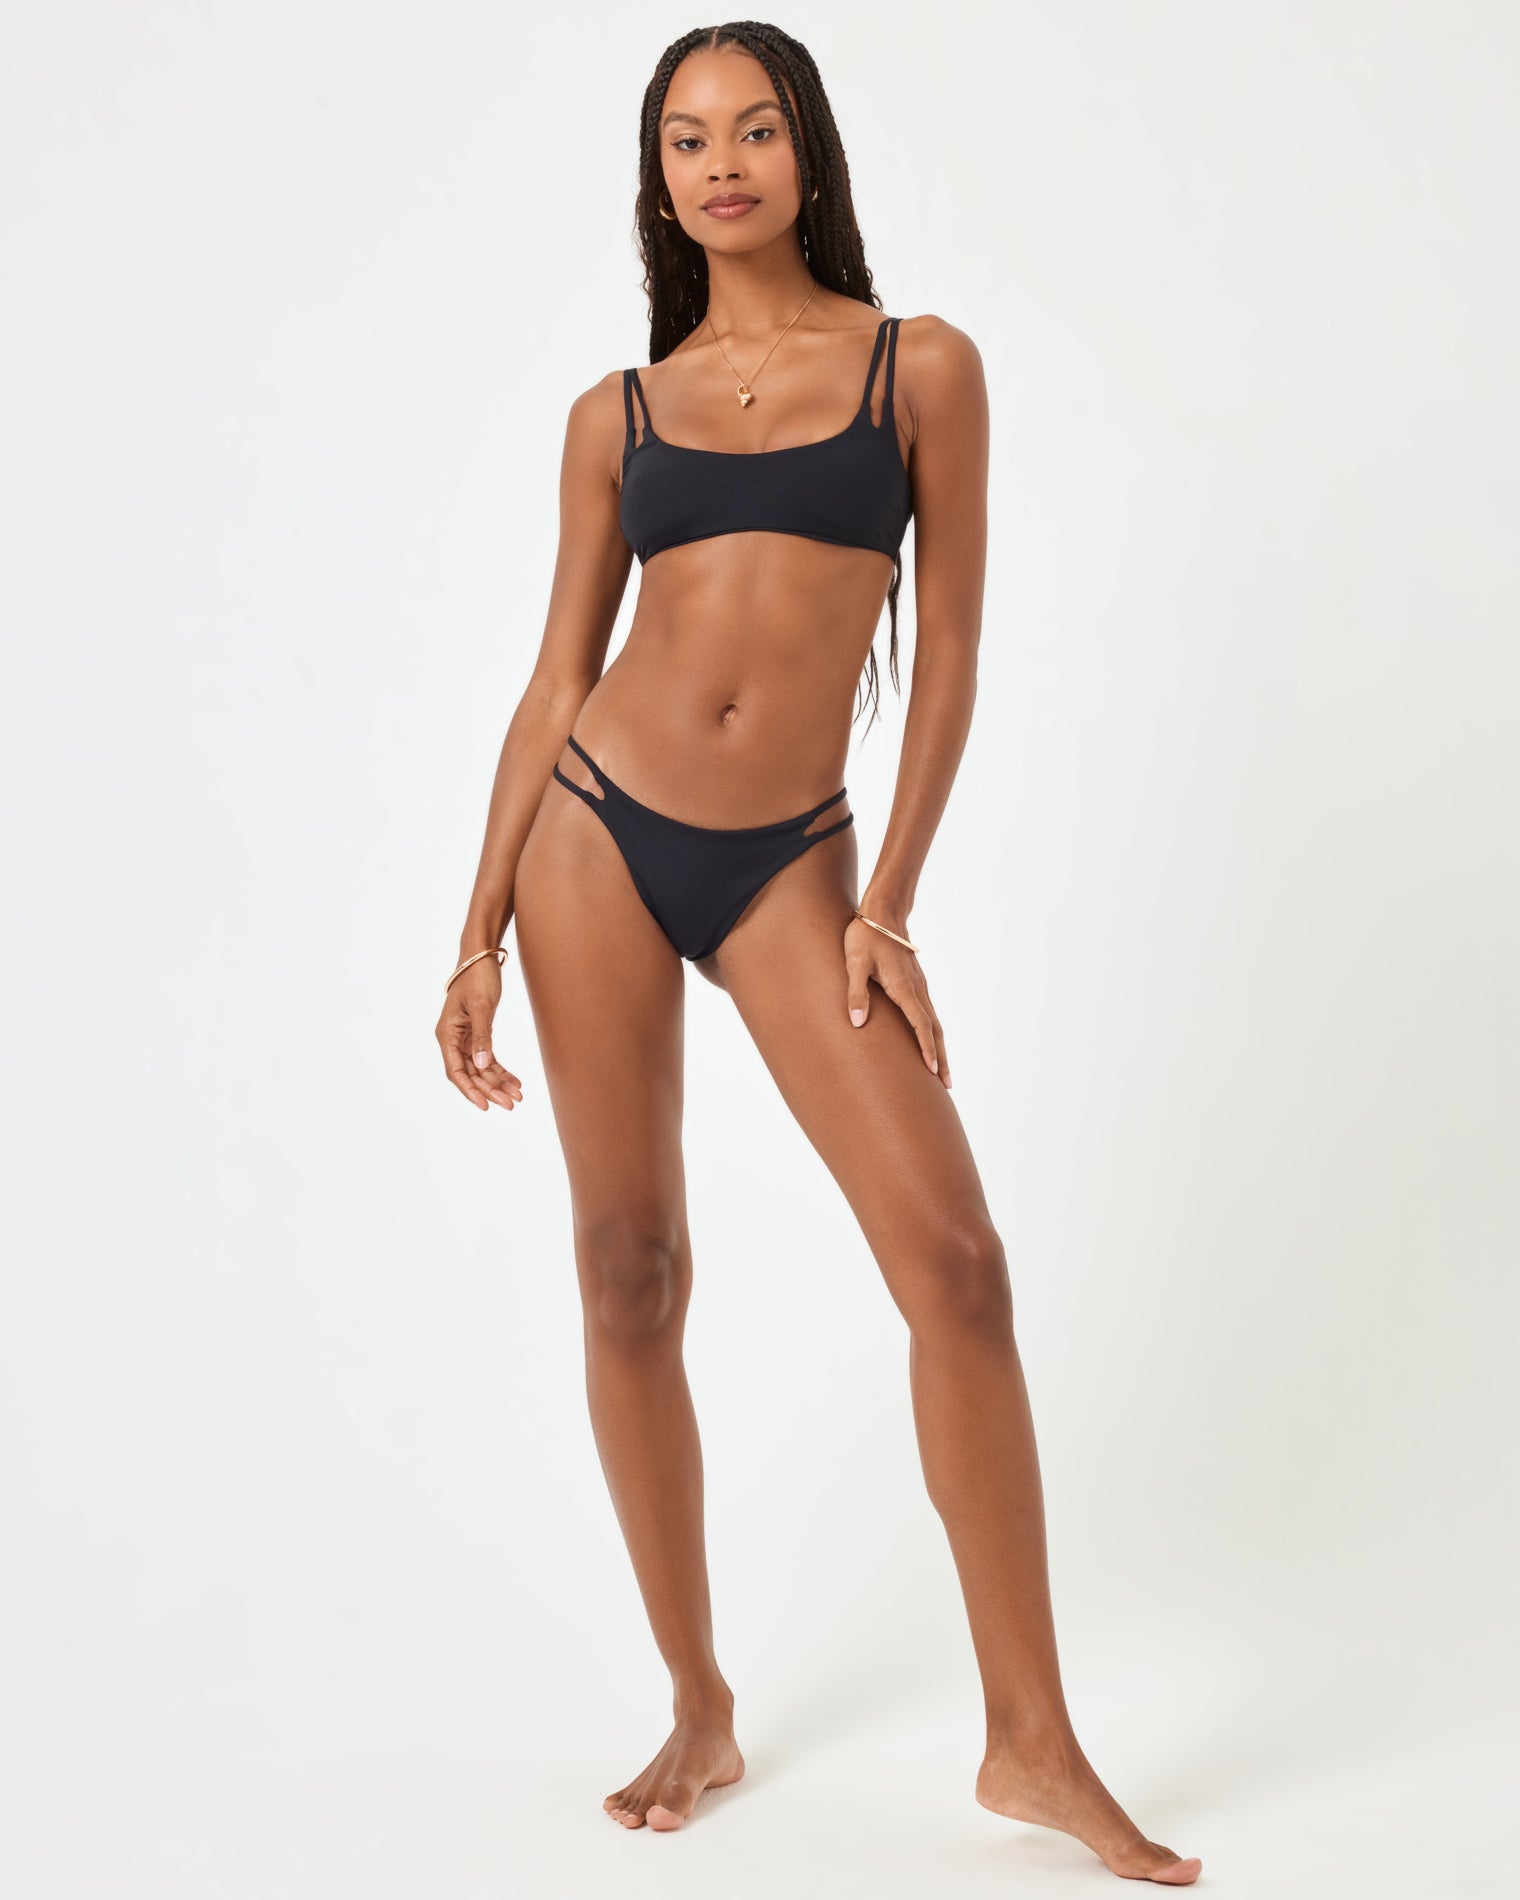 Zinnia Bikini Top - Black Black | Model: Taelor (size: S) | Hover